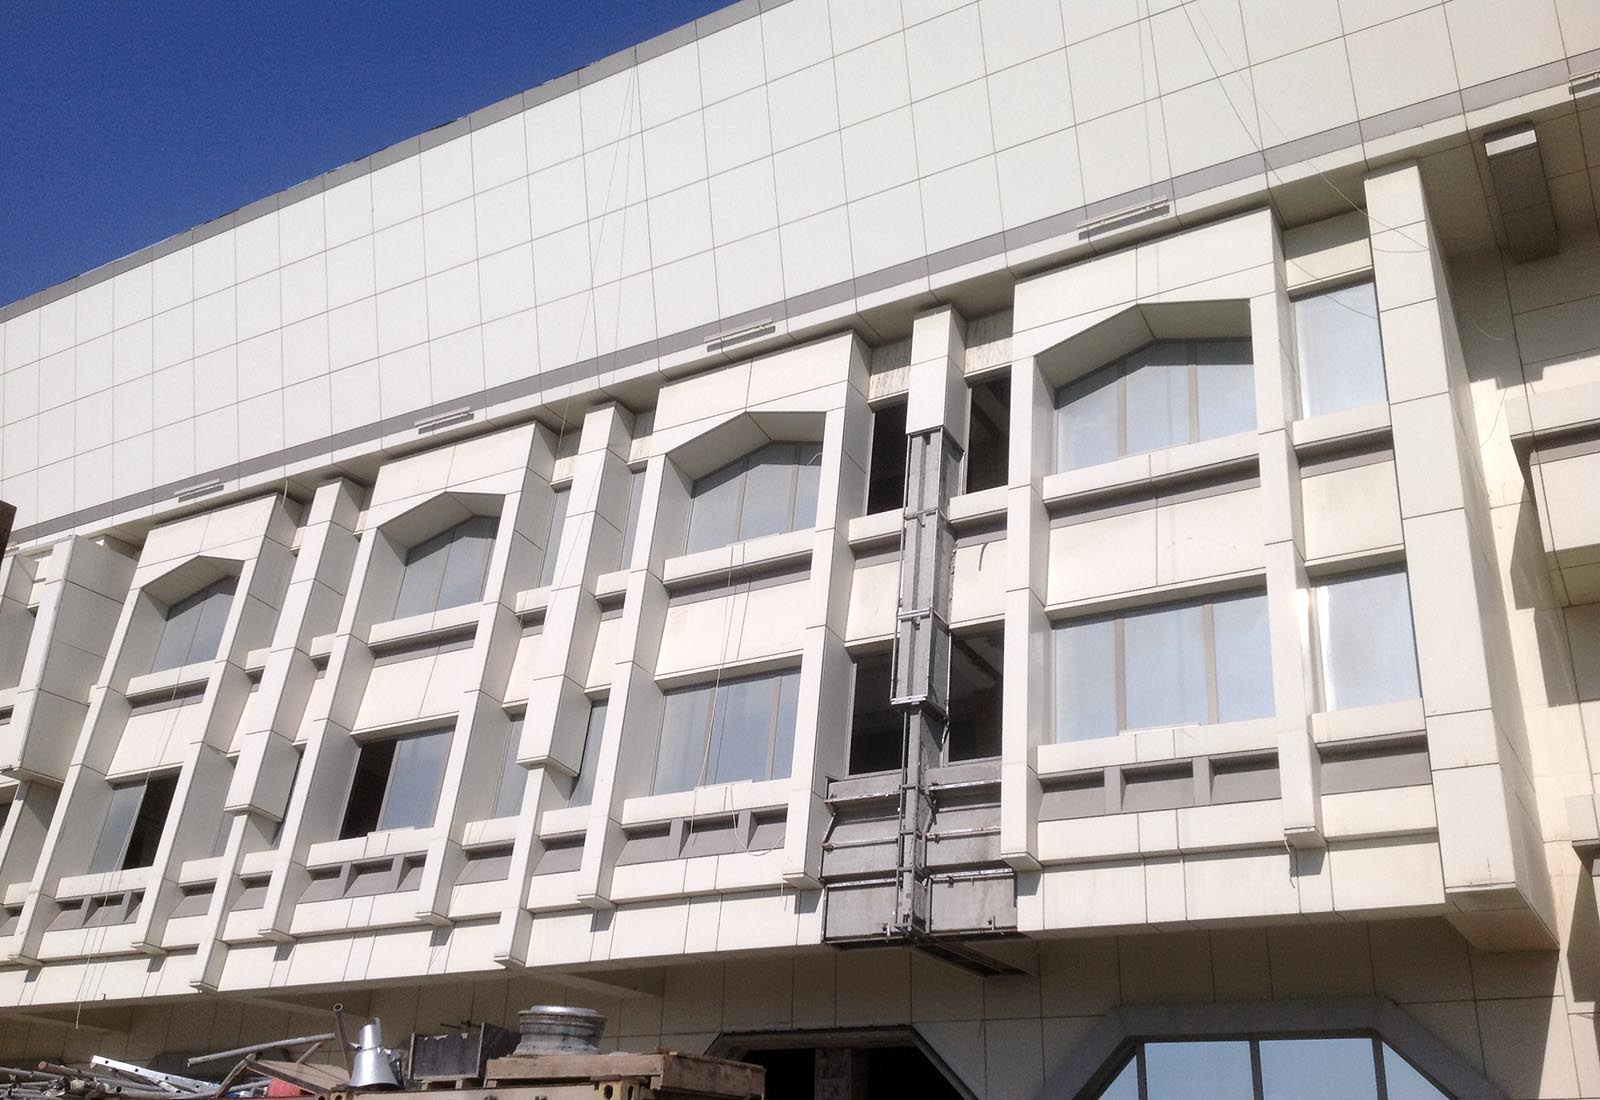 Baku sport hall - Survey on the façade